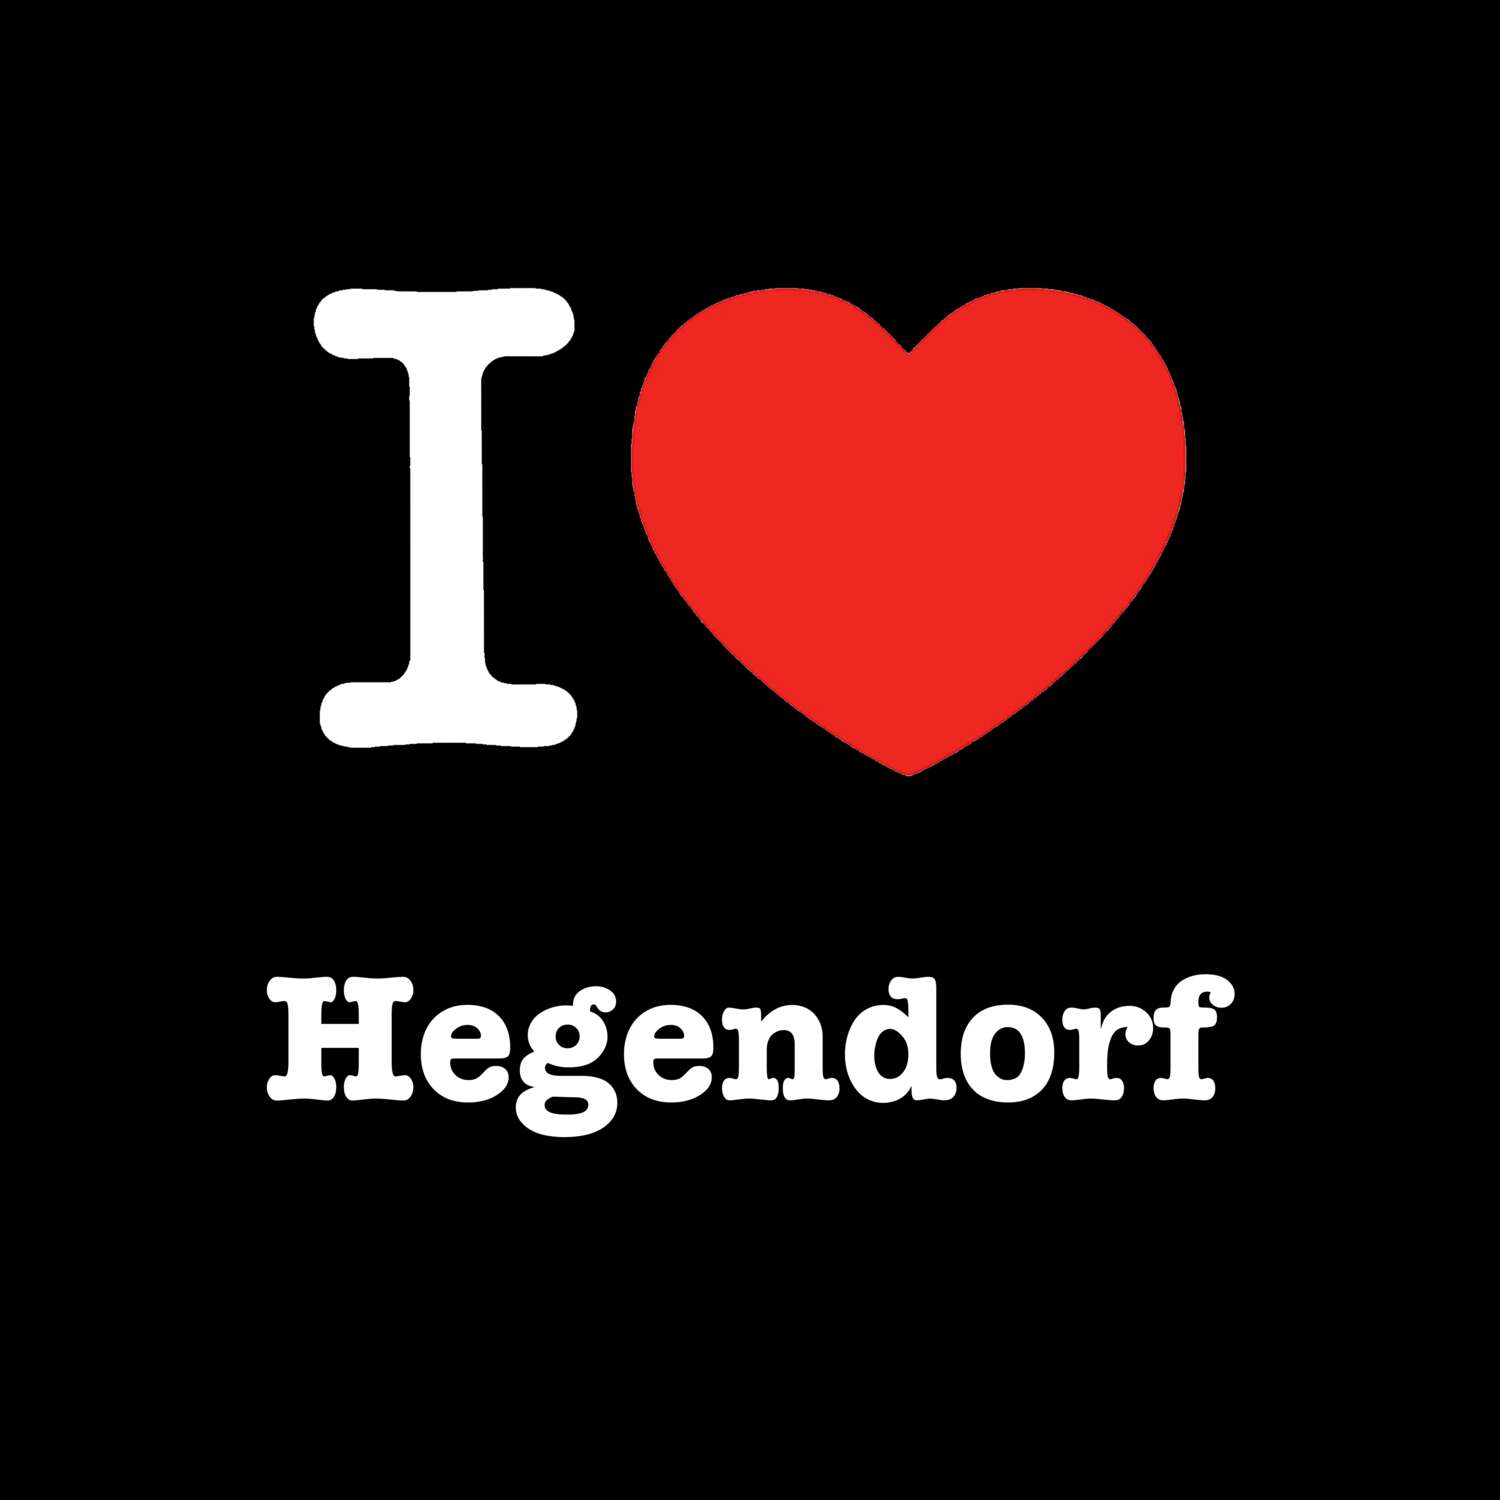 Hegendorf T-Shirt »I love«